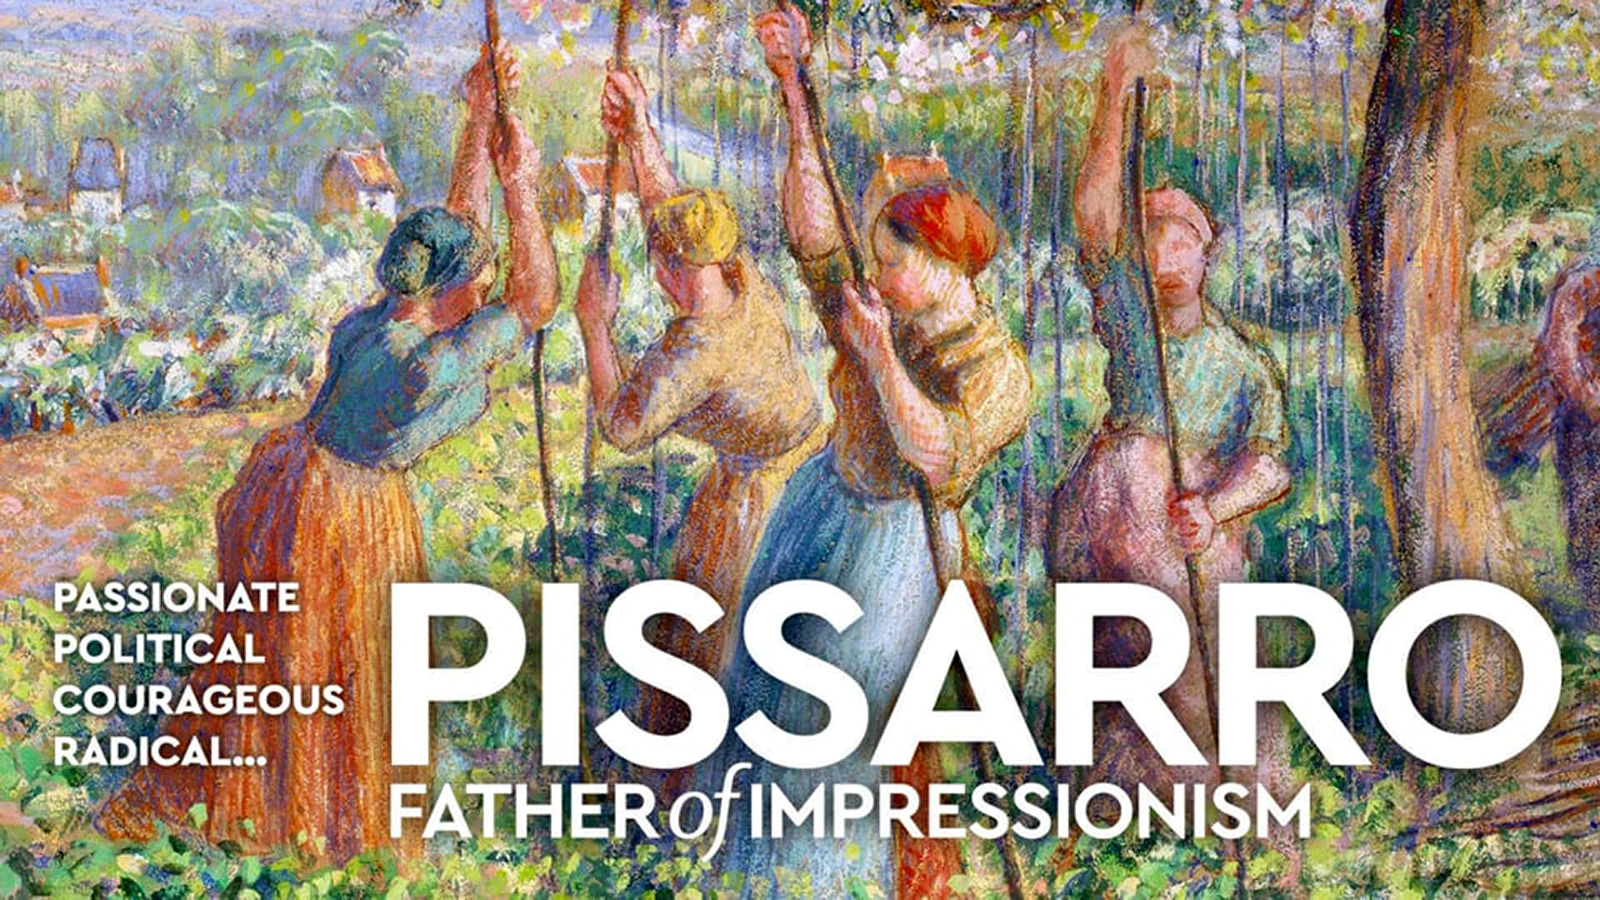 Pissarro: The Father of Impressionism